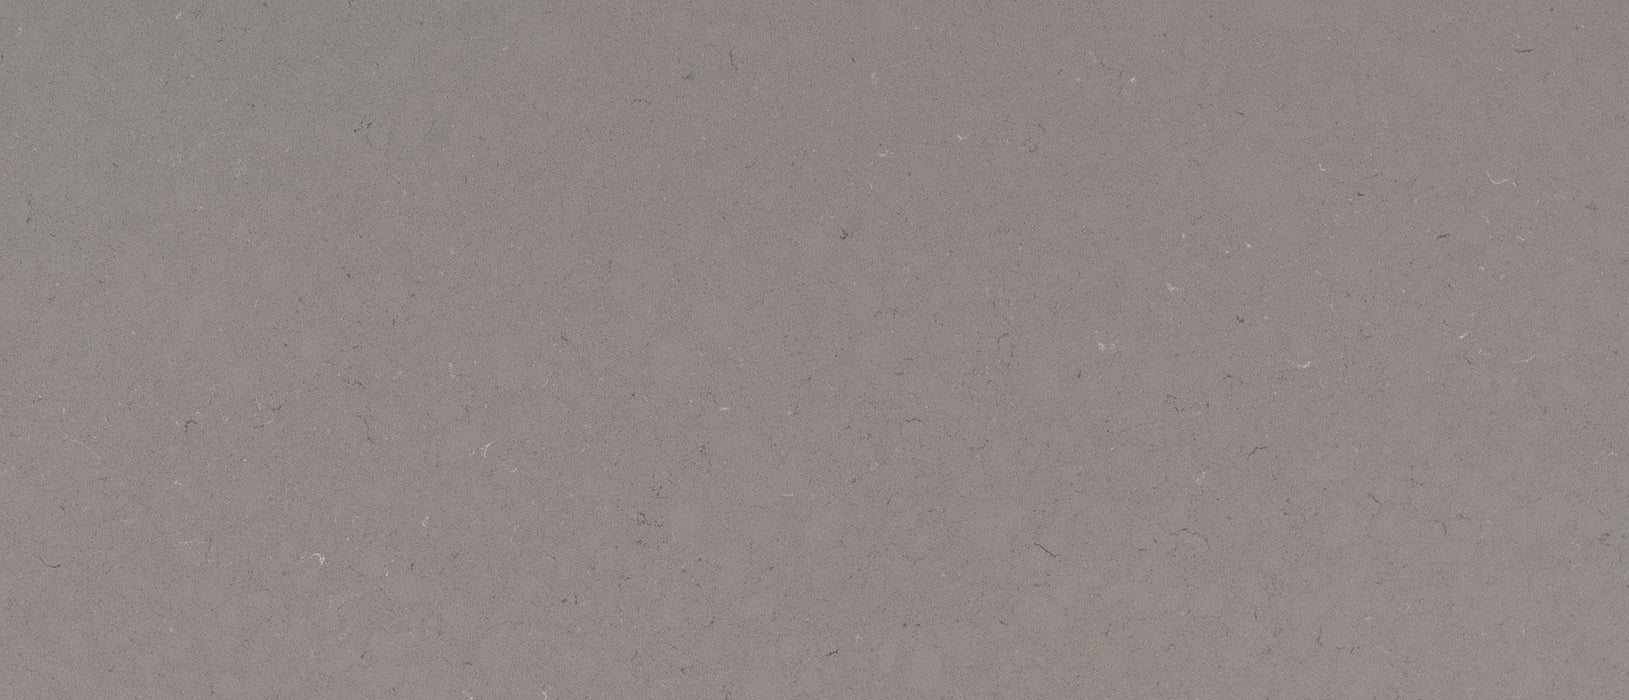 Fossil Gray 127x75 3 cm Polished Quartz Slab